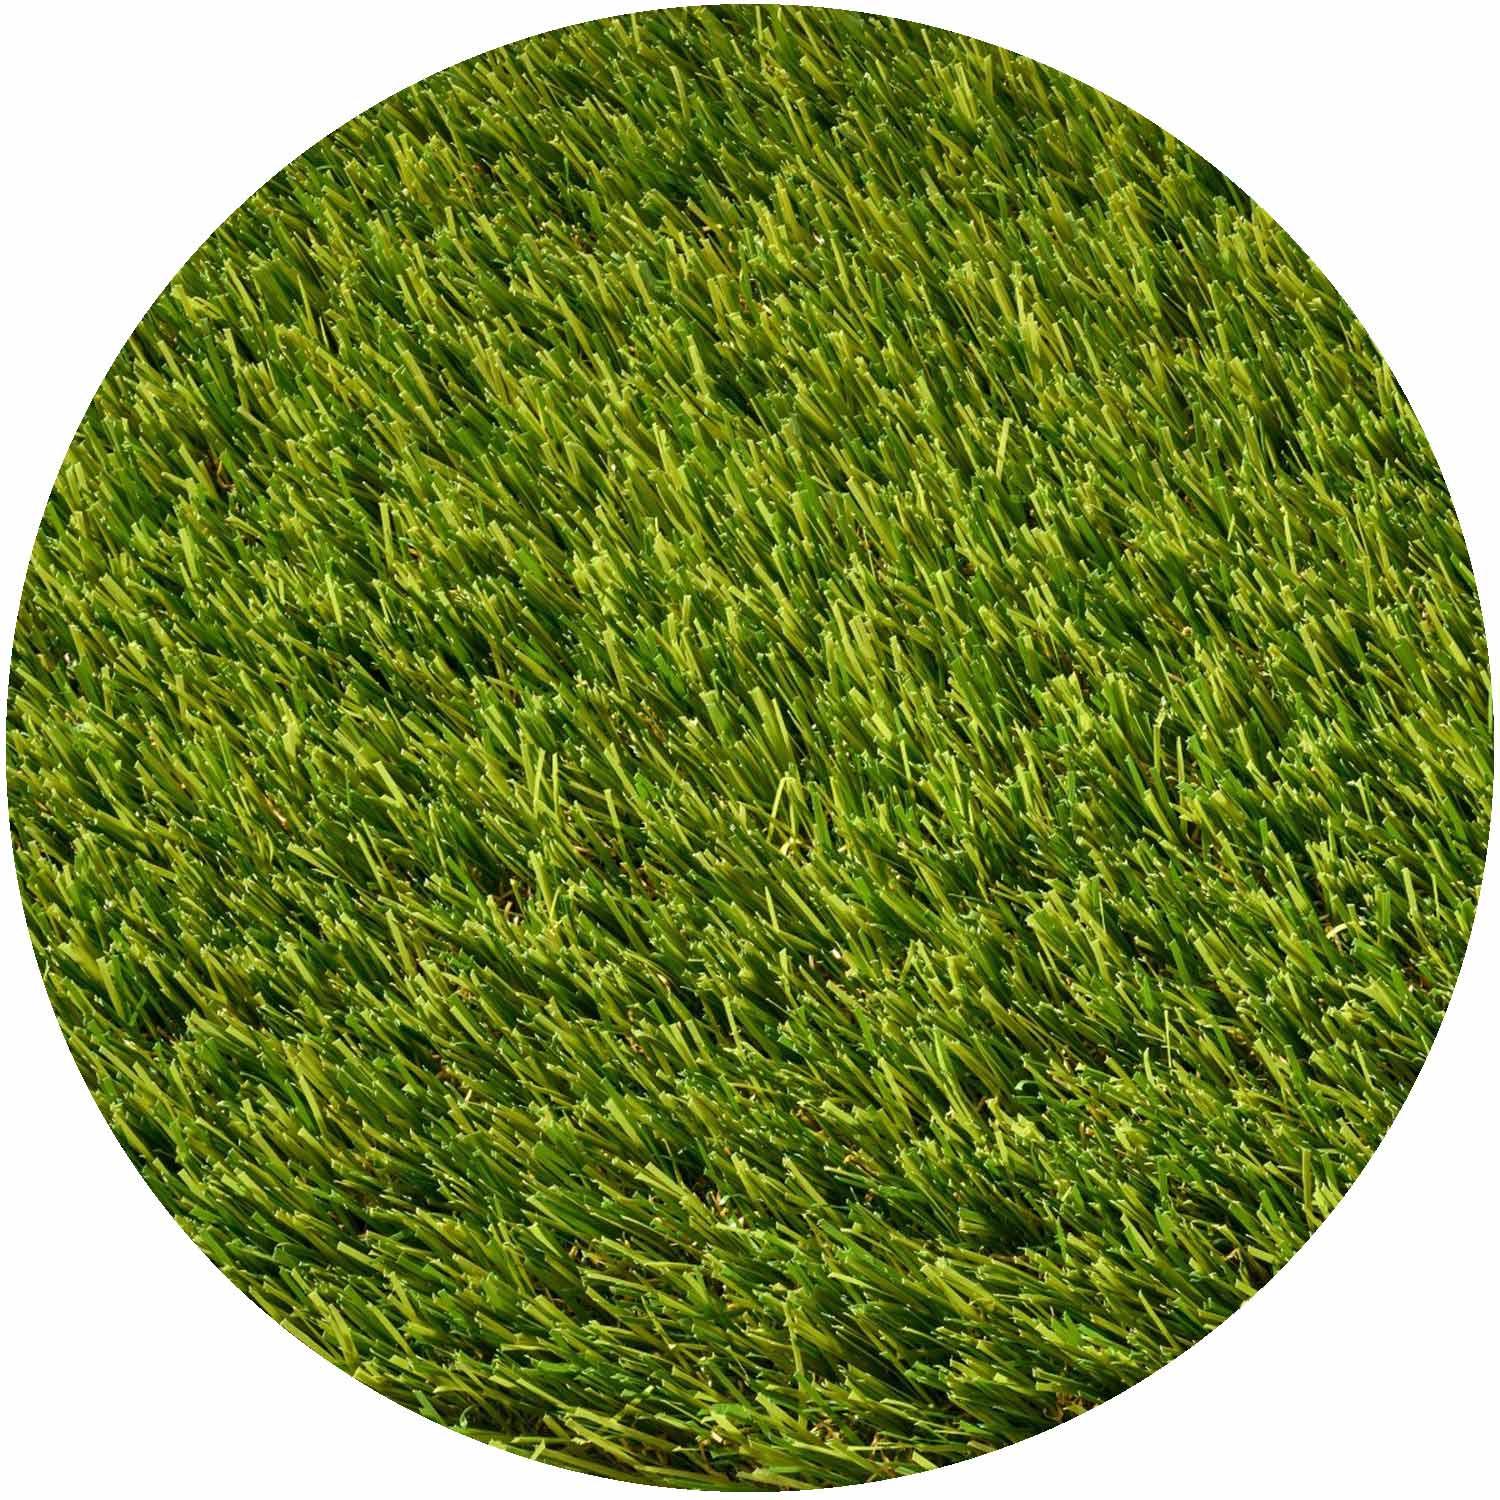 Diablo 35mm Pile Artificial Grass per mtr